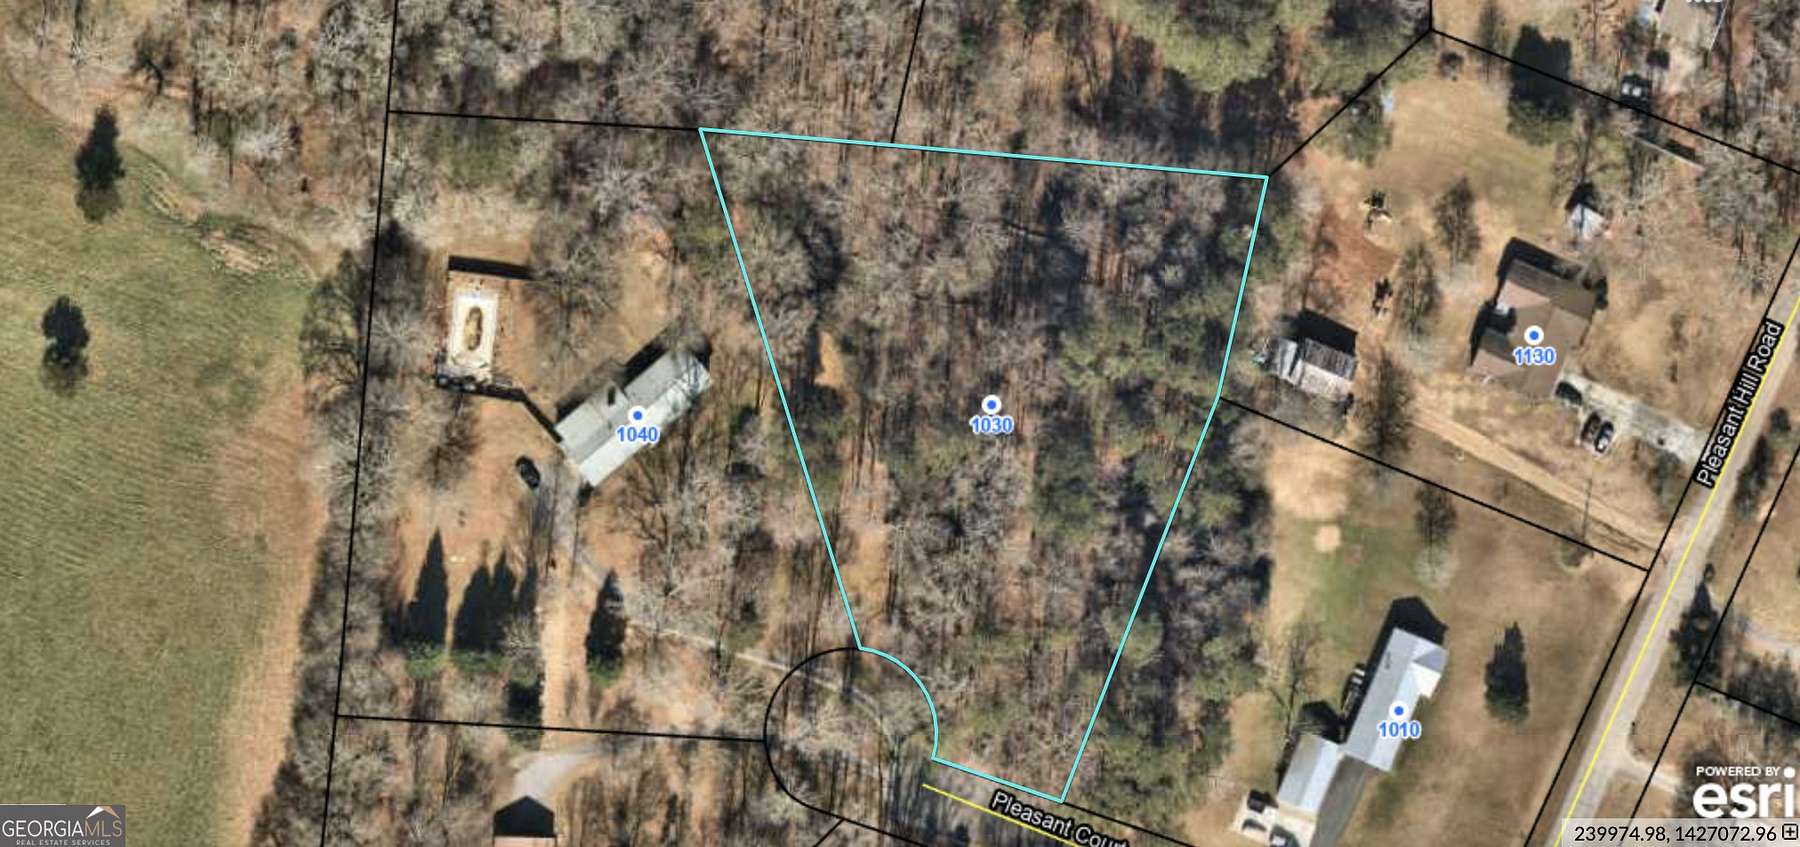 1.7 Acres of Residential Land for Sale in Bogart, Georgia